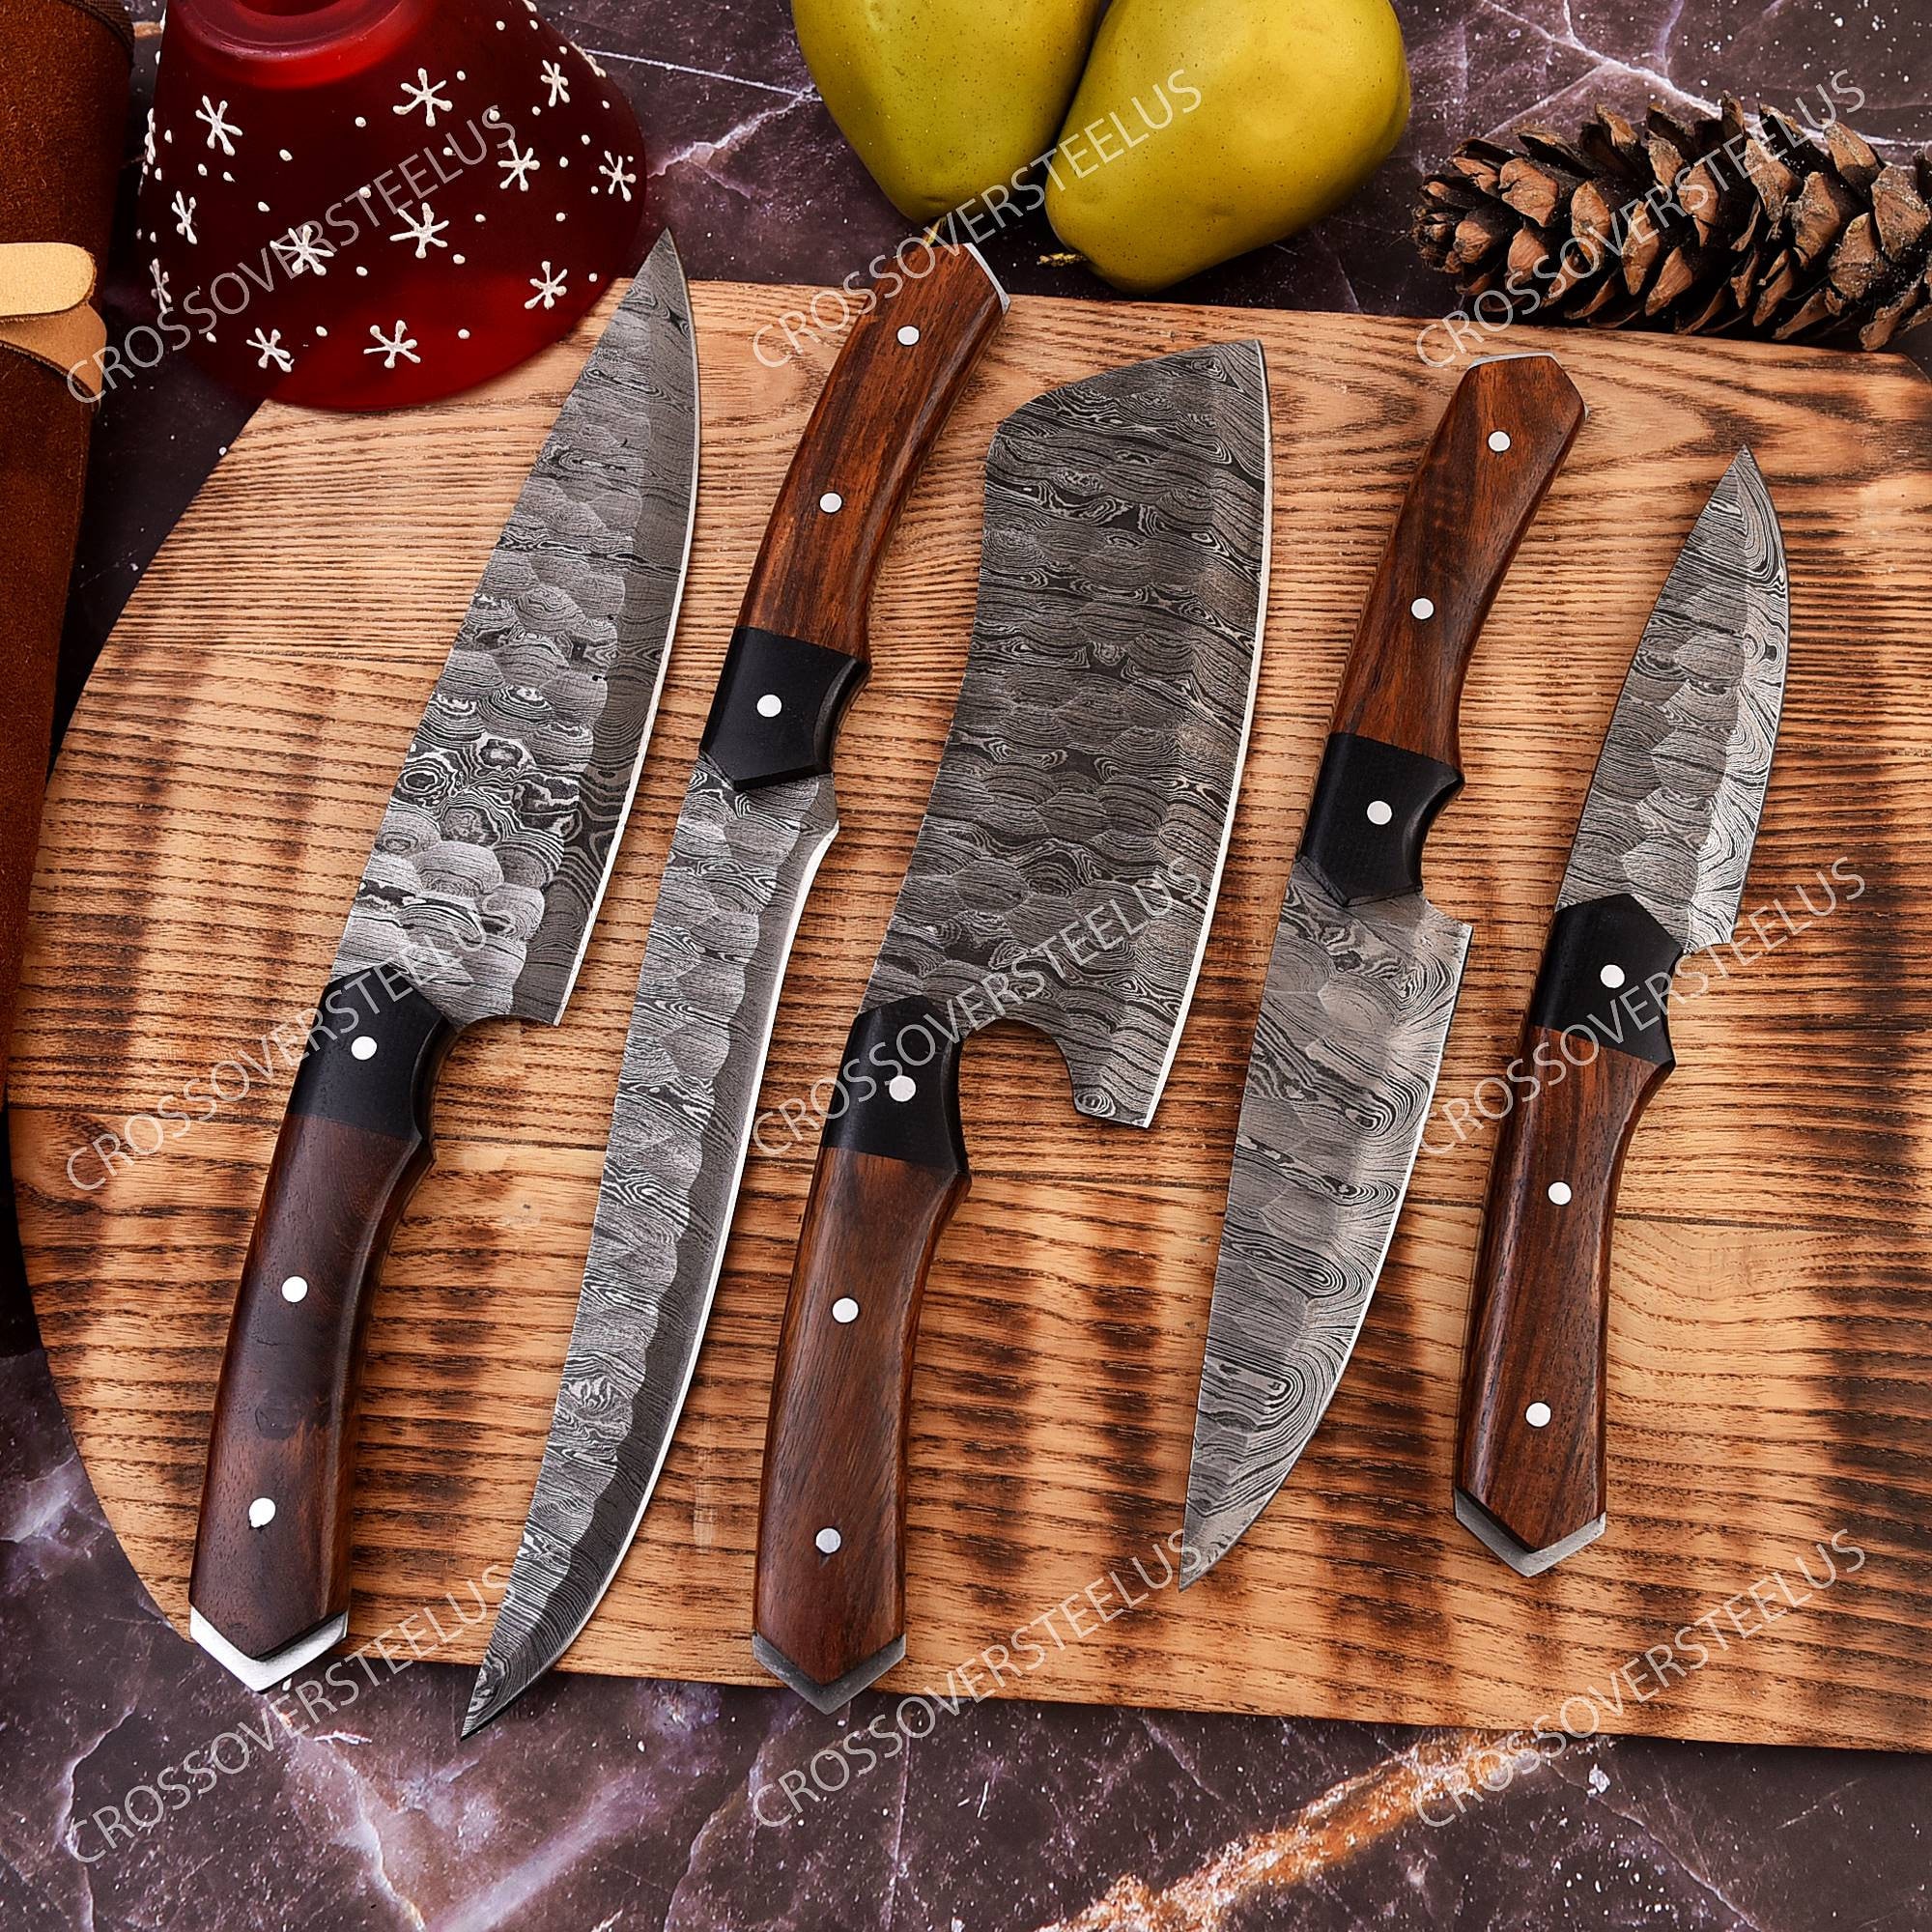 EUNA 5 PCS Chef Knife Set Ultra Sharp Kitchen Knife Set with